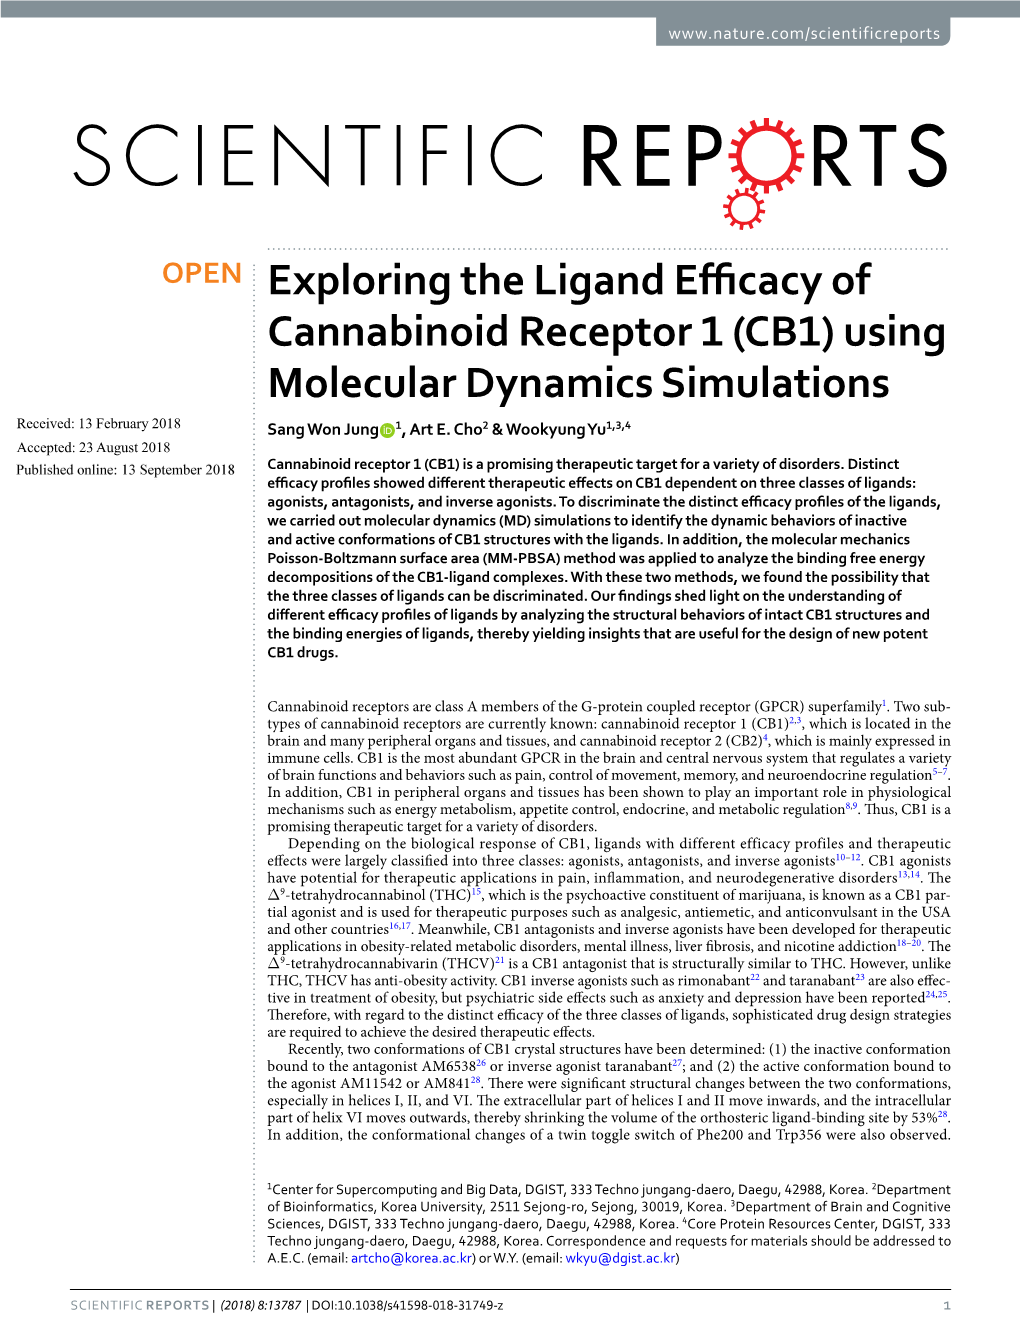 Exploring the Ligand Efficacy of Cannabinoid Receptor 1 (CB1)